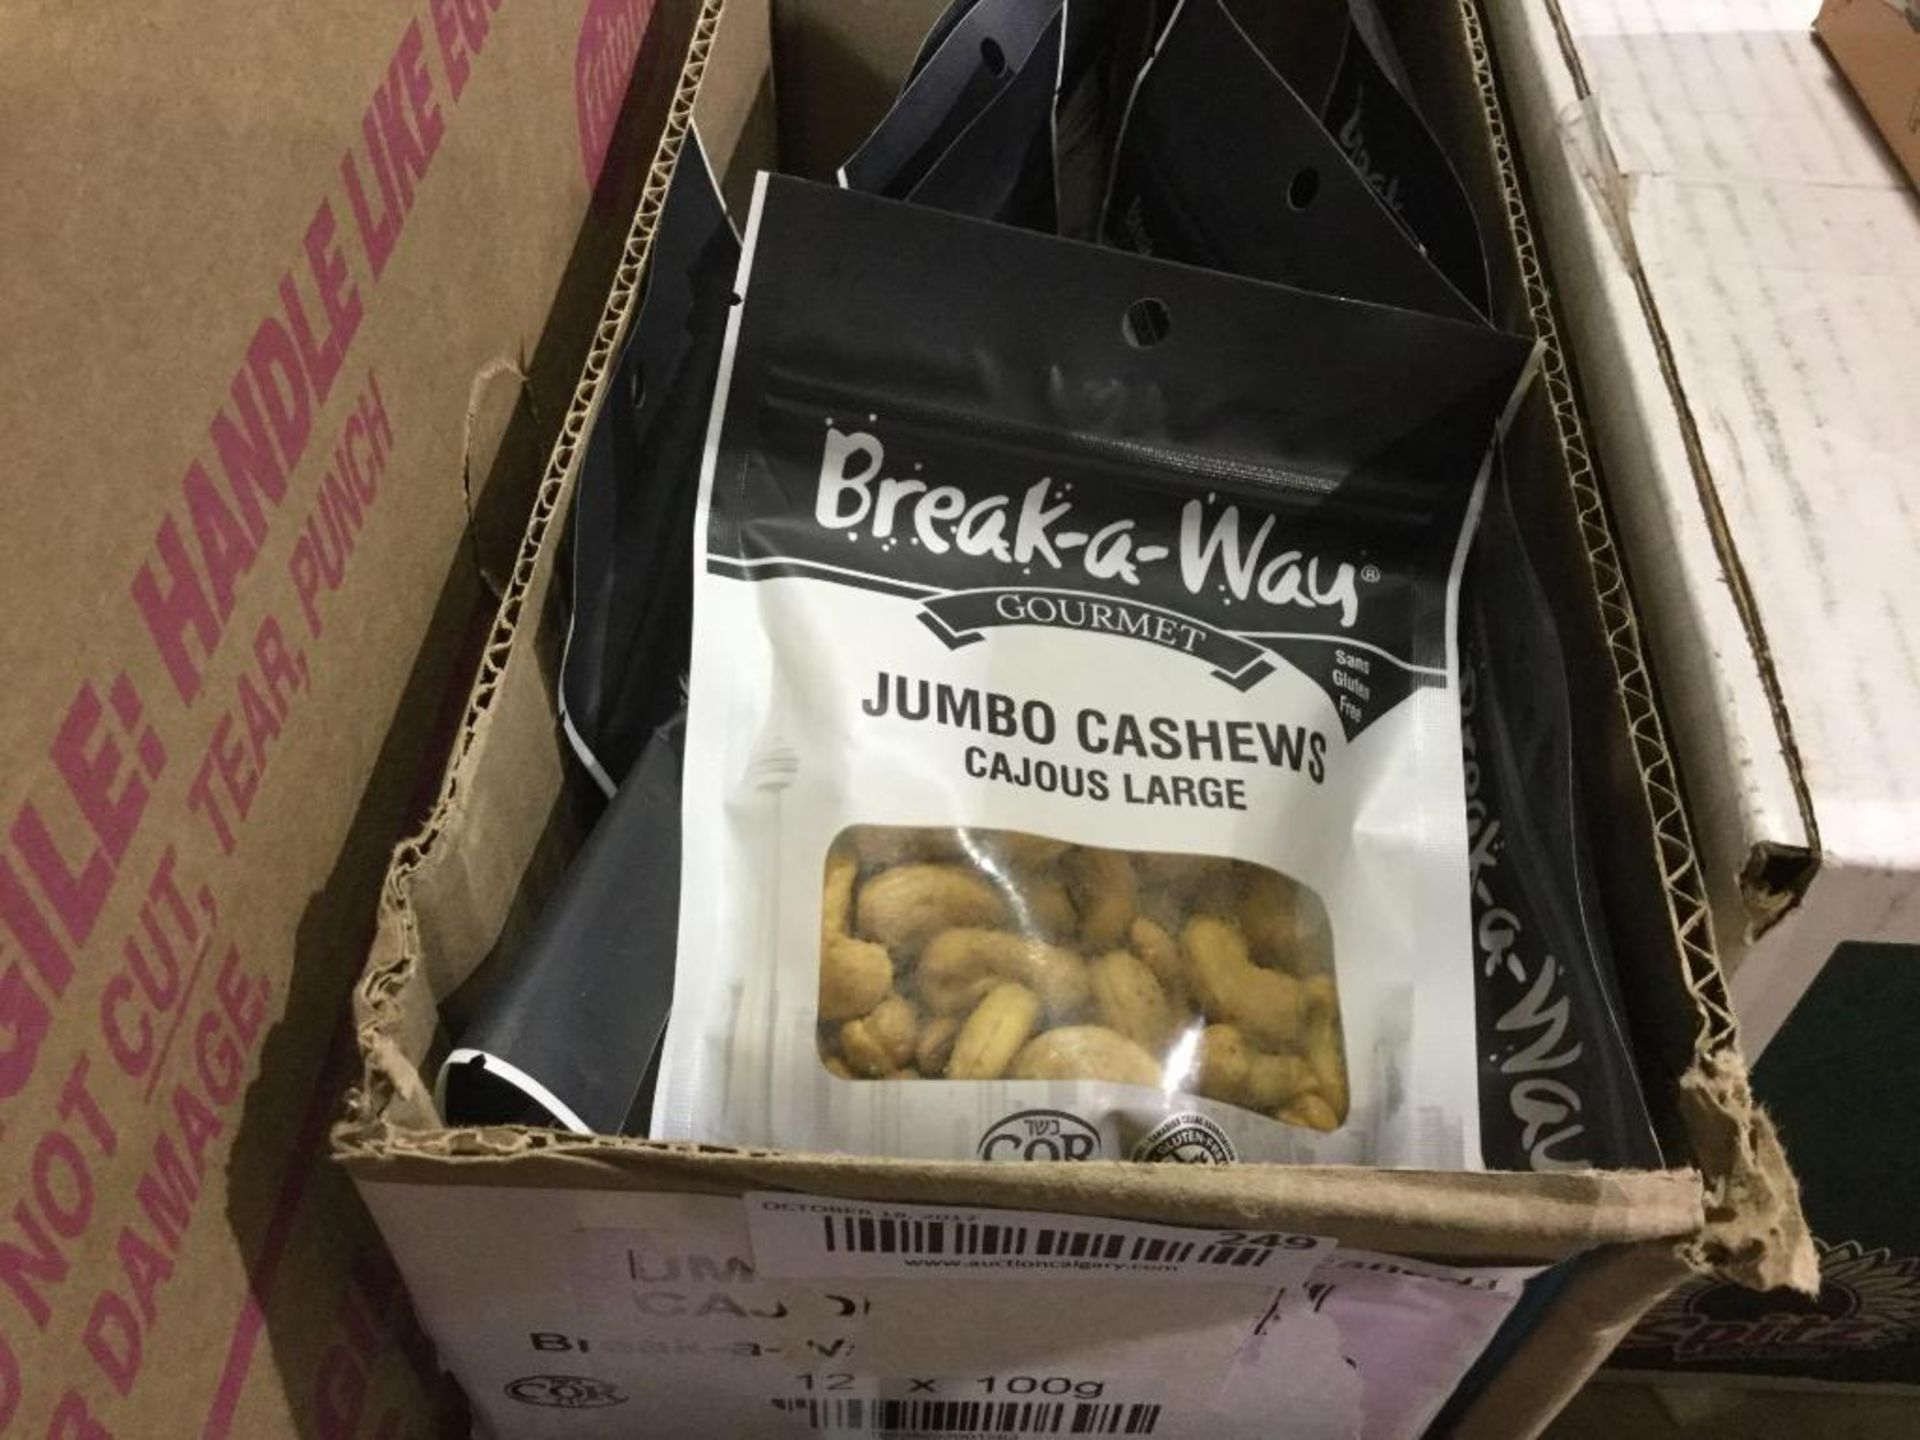 Open Box of Break-a-way Jumbo Cashews 100g bags appox 12